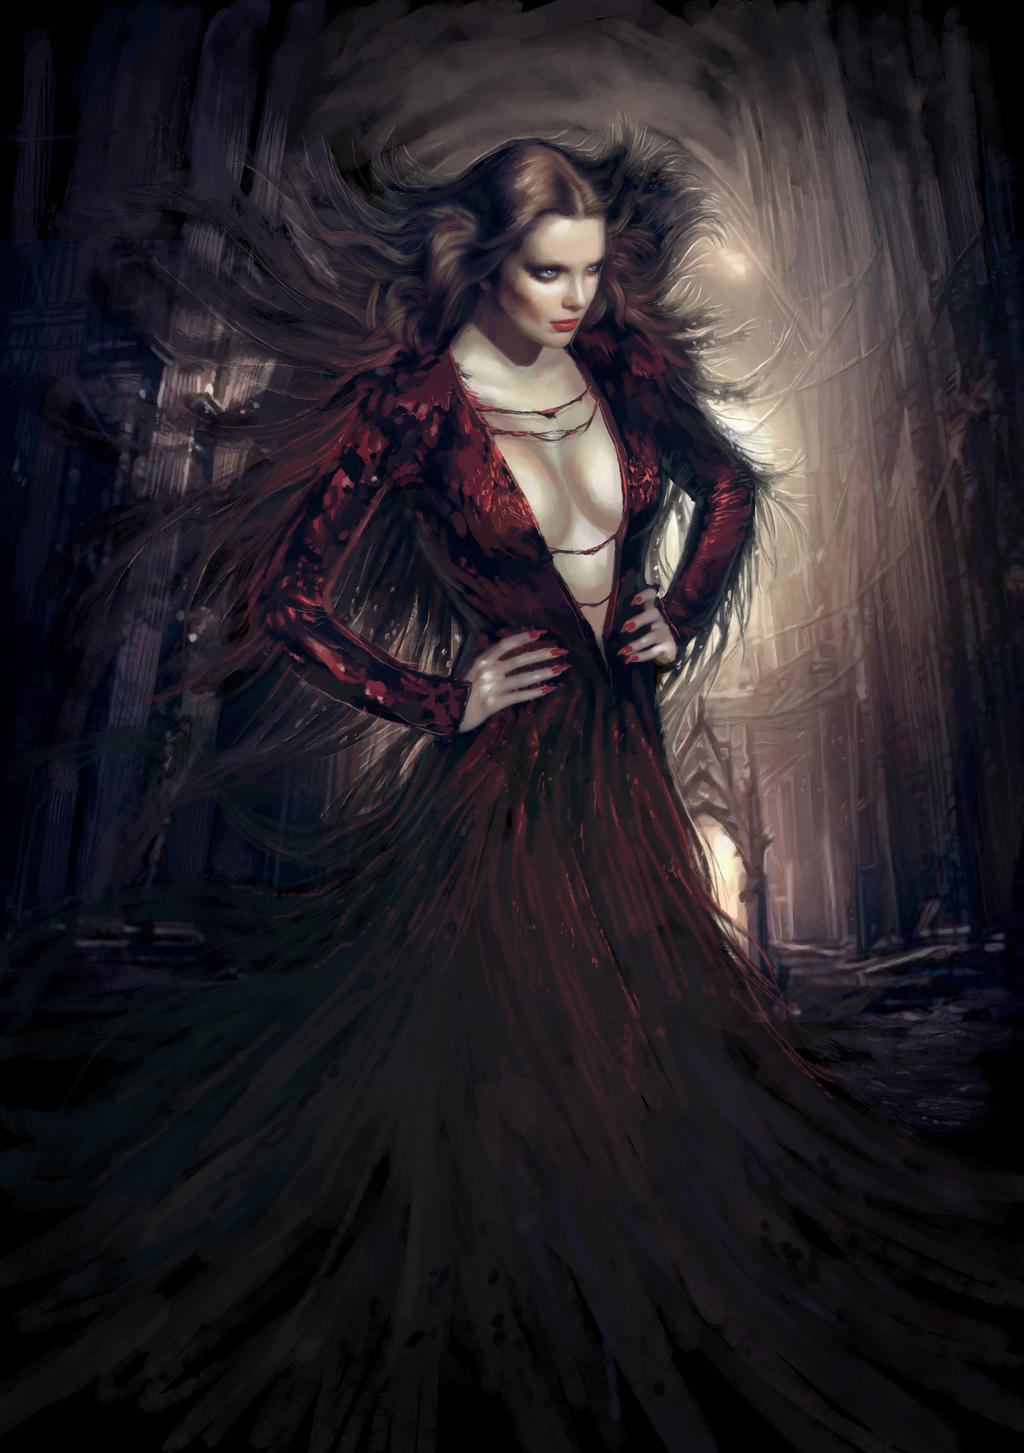 vampire_countess_by_thebastardson-d48tpbk.jpg